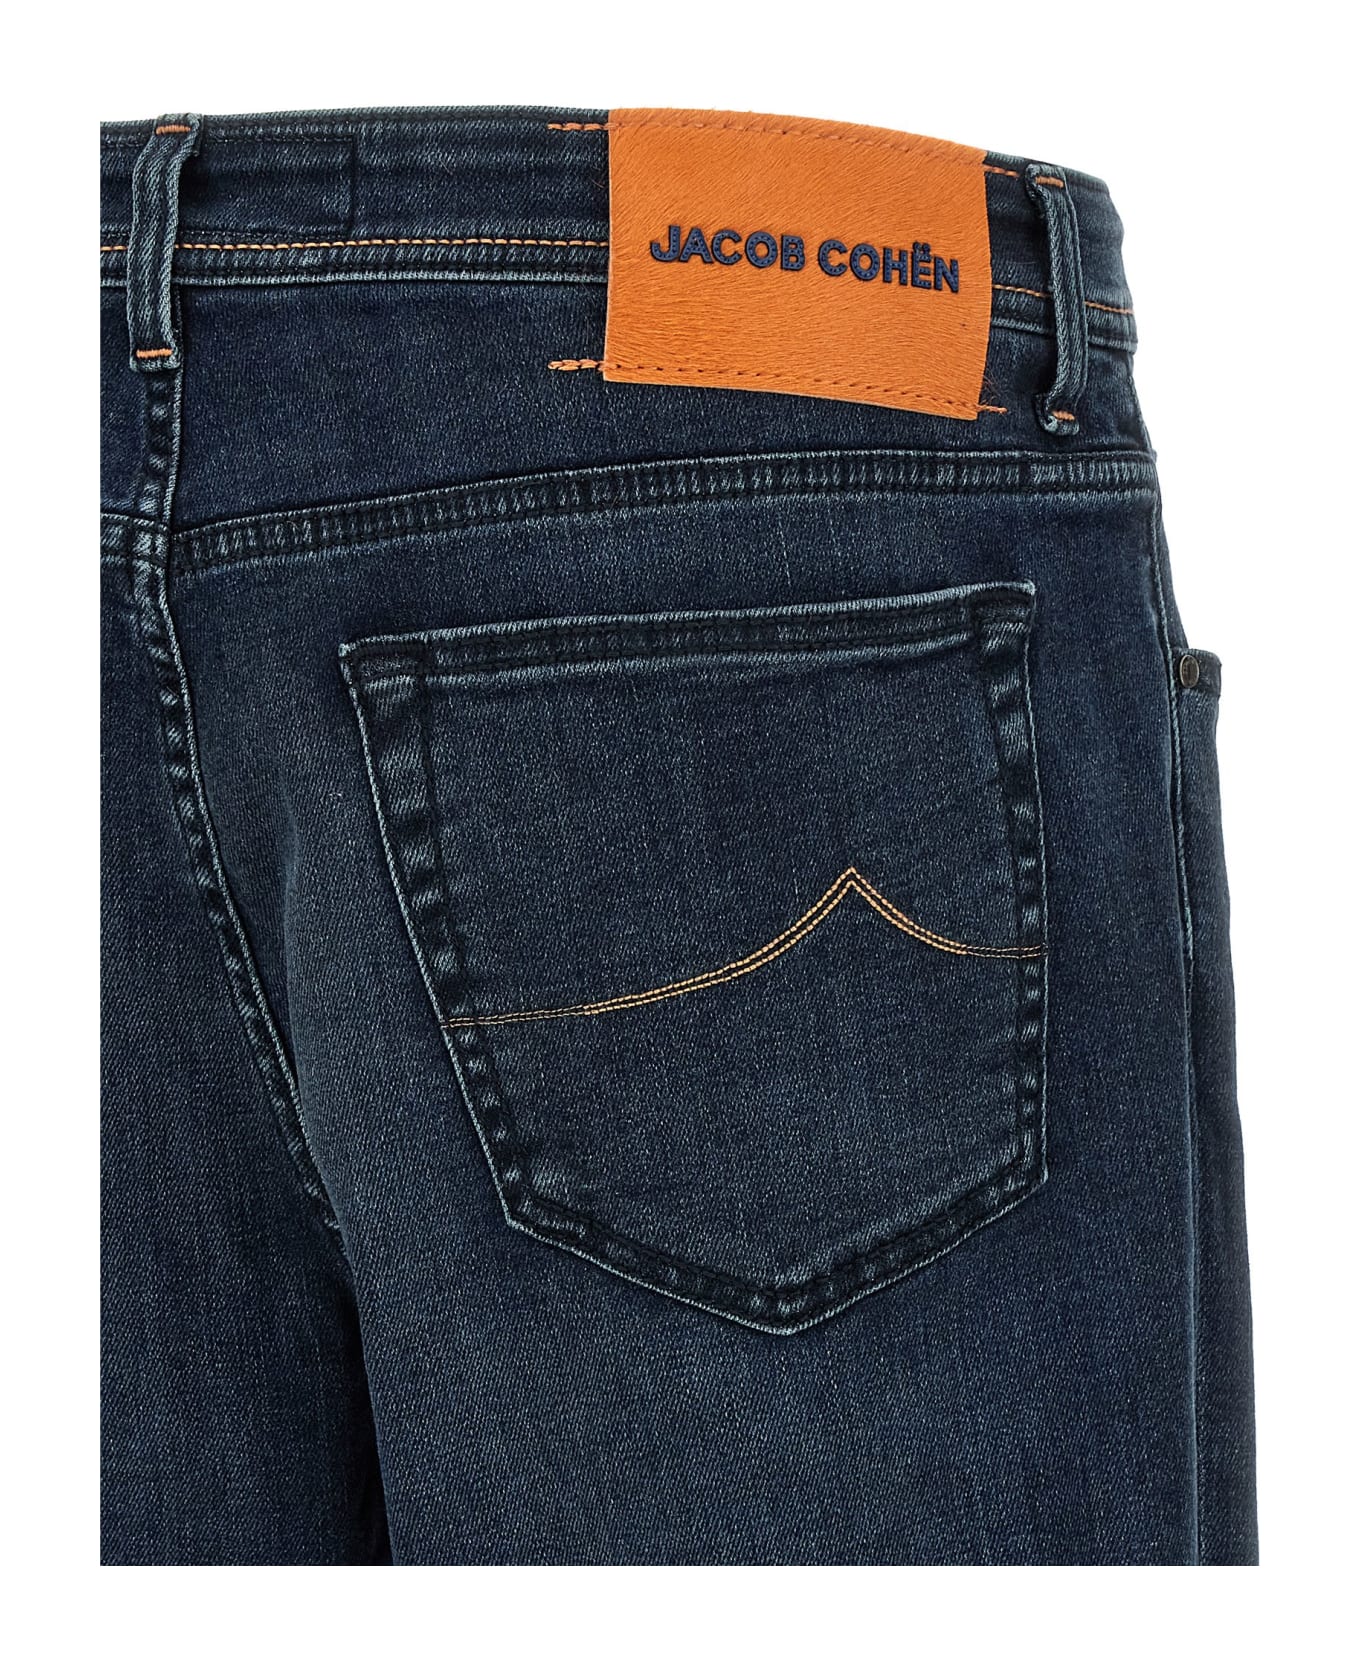 Jacob Cohen 'bard' Jeans - Blue デニム